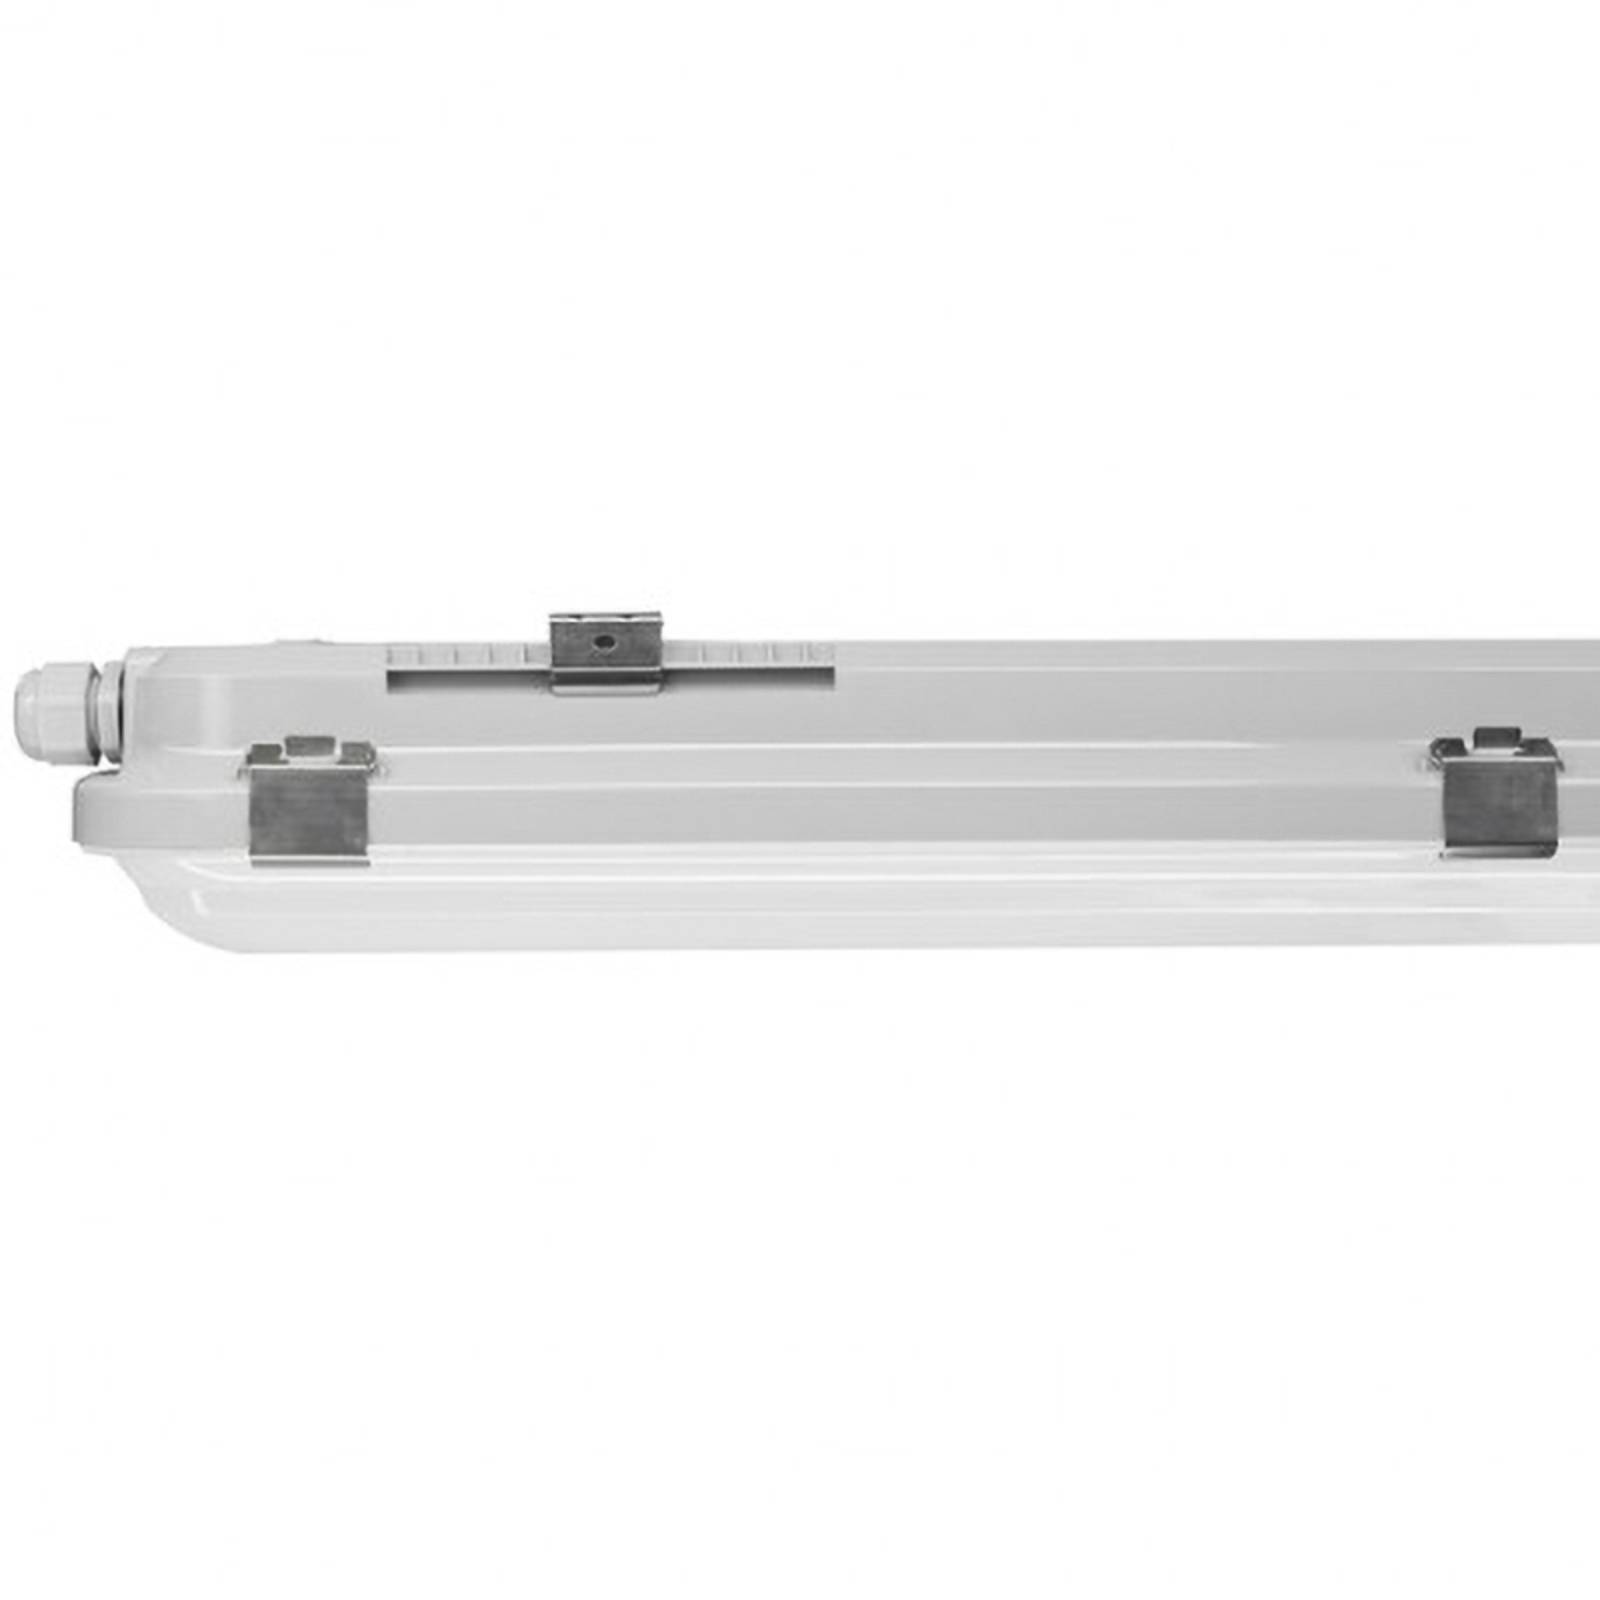 InnoGreen AQUOS 3.0 BASELine LED-lampa 122cm 850